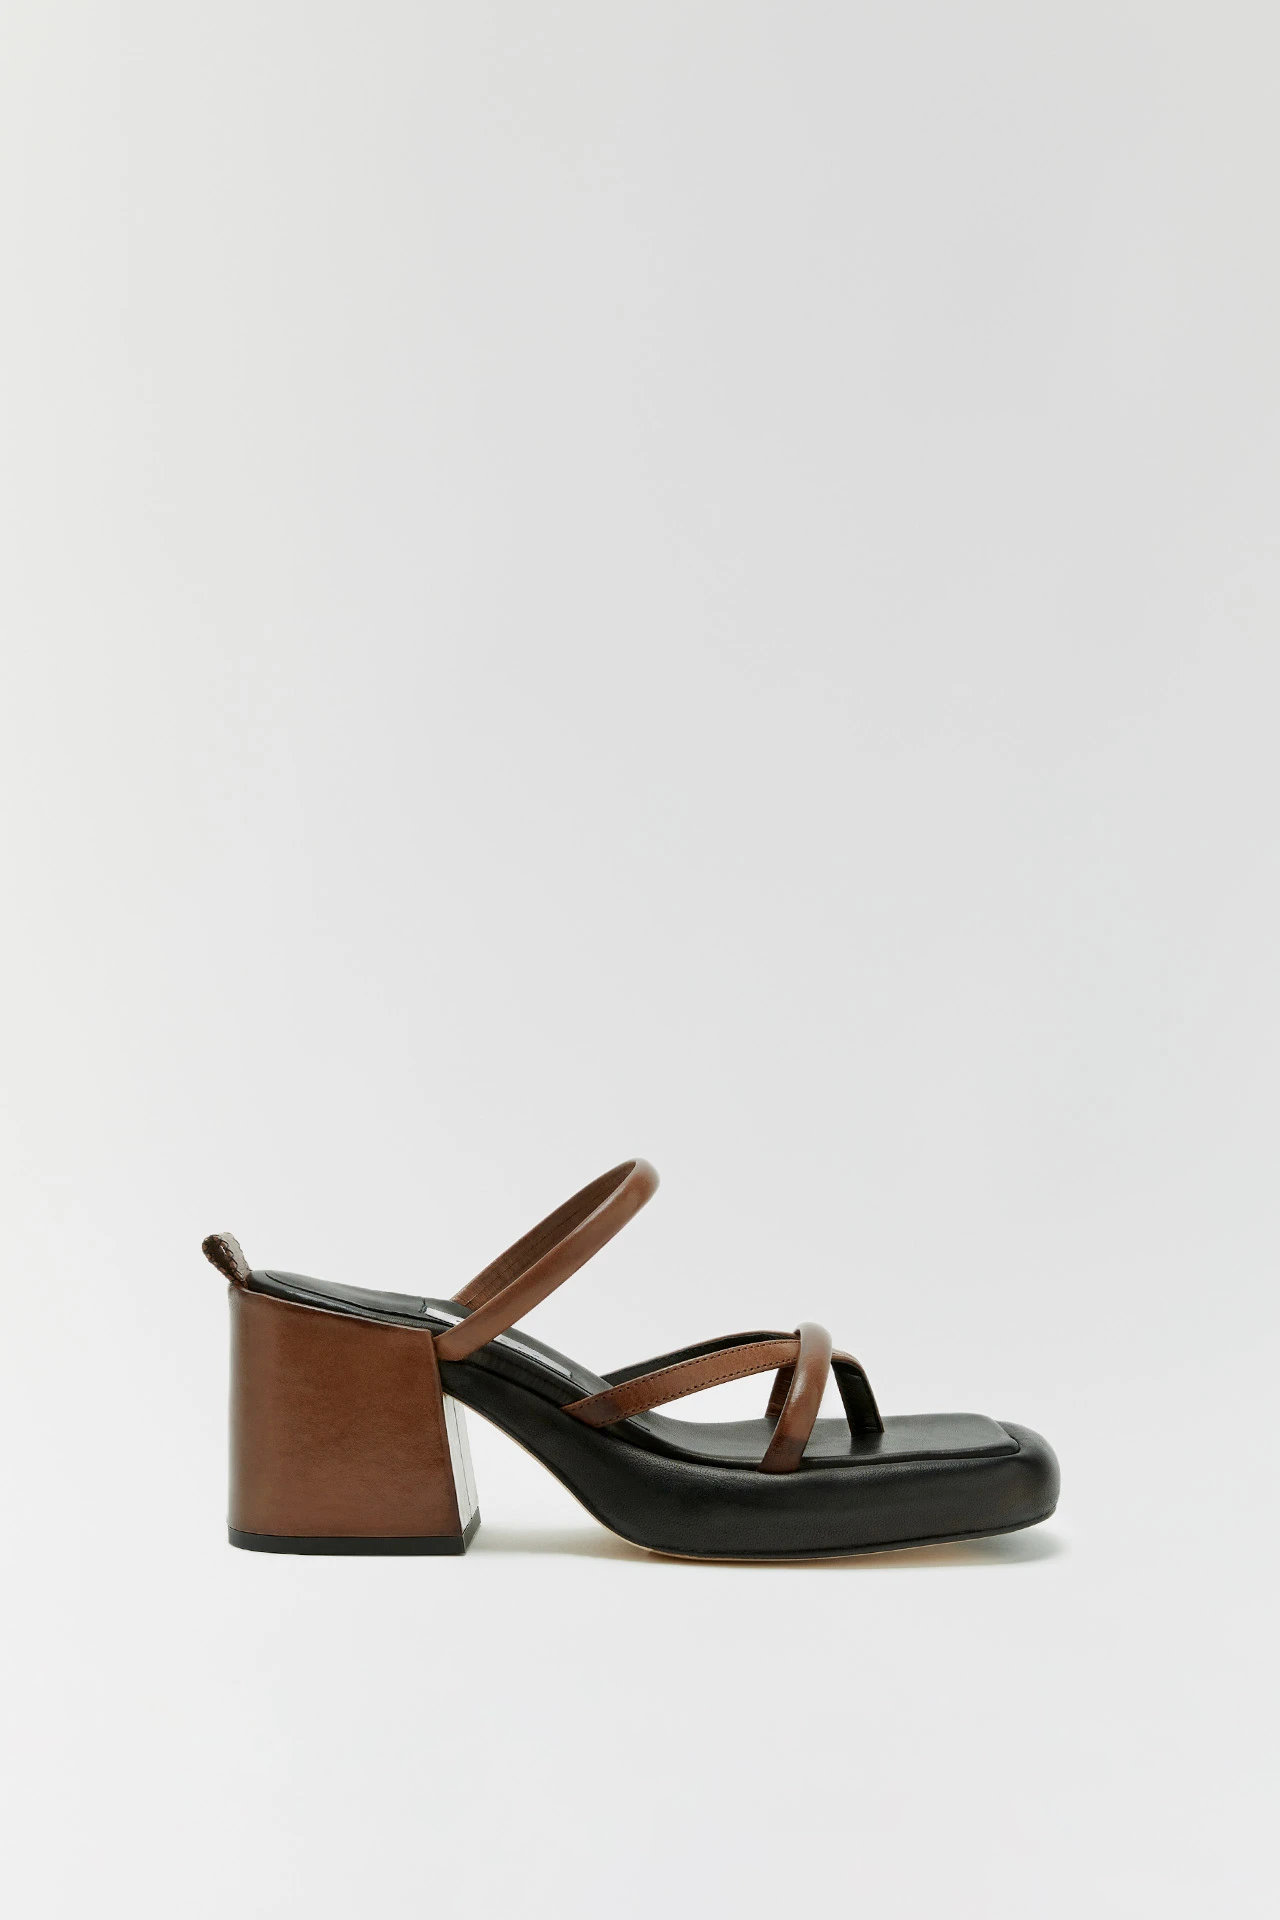 Delphine Brown Sandals | Miista Europe | Made in Spain